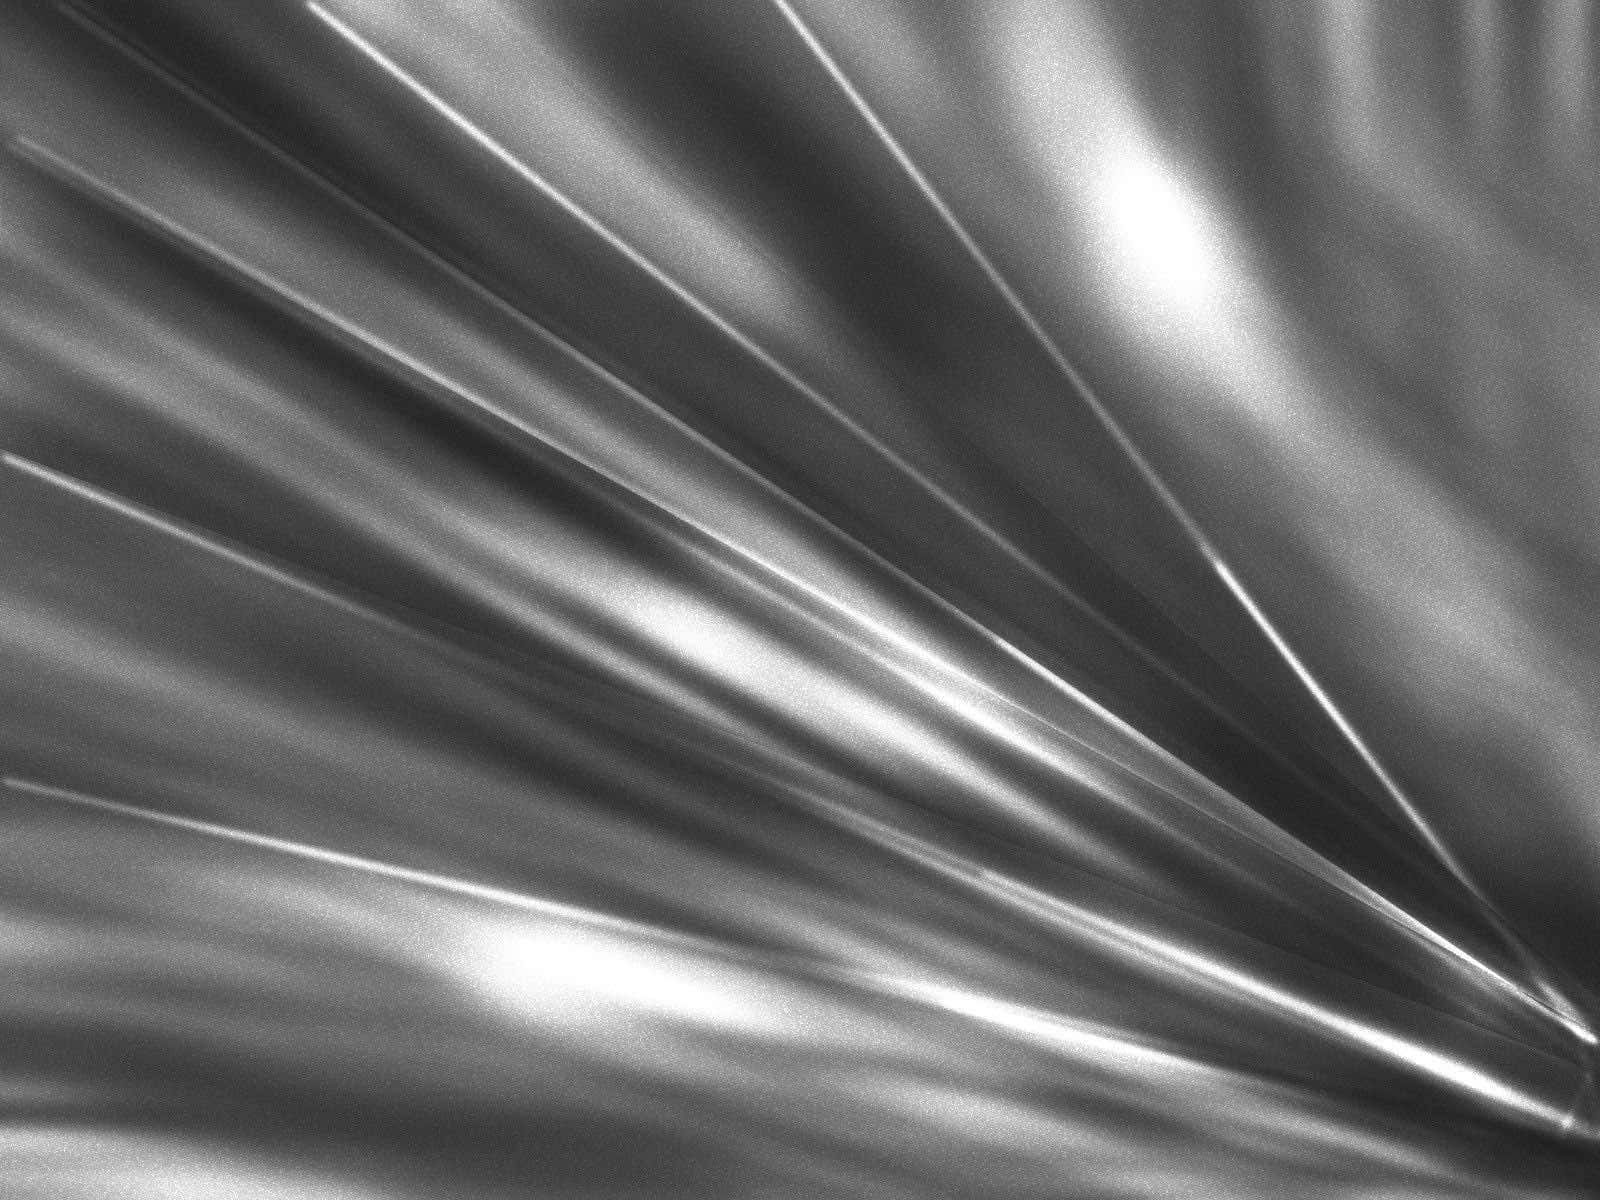 Metallic Shine - A Sparkeling Silver Foil Background